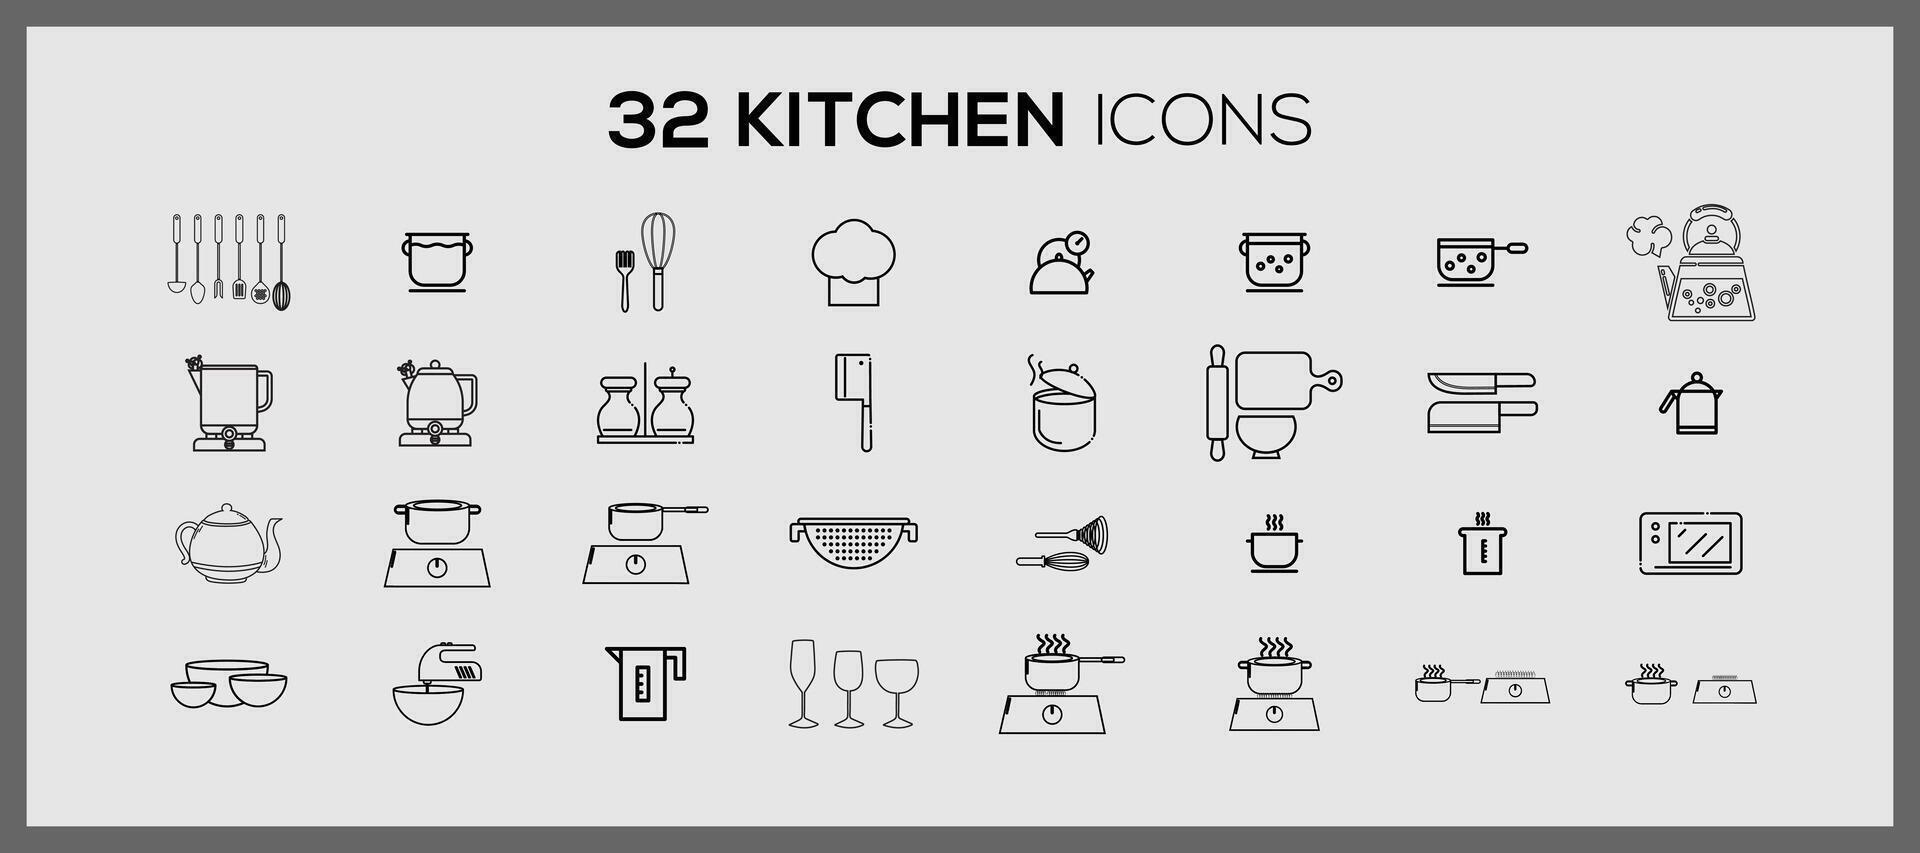 Different kitchen icons. Cute kitchen utensils doodle sticker set. Cooking doodle icons kitchen utensils line food restaurant logo. vector